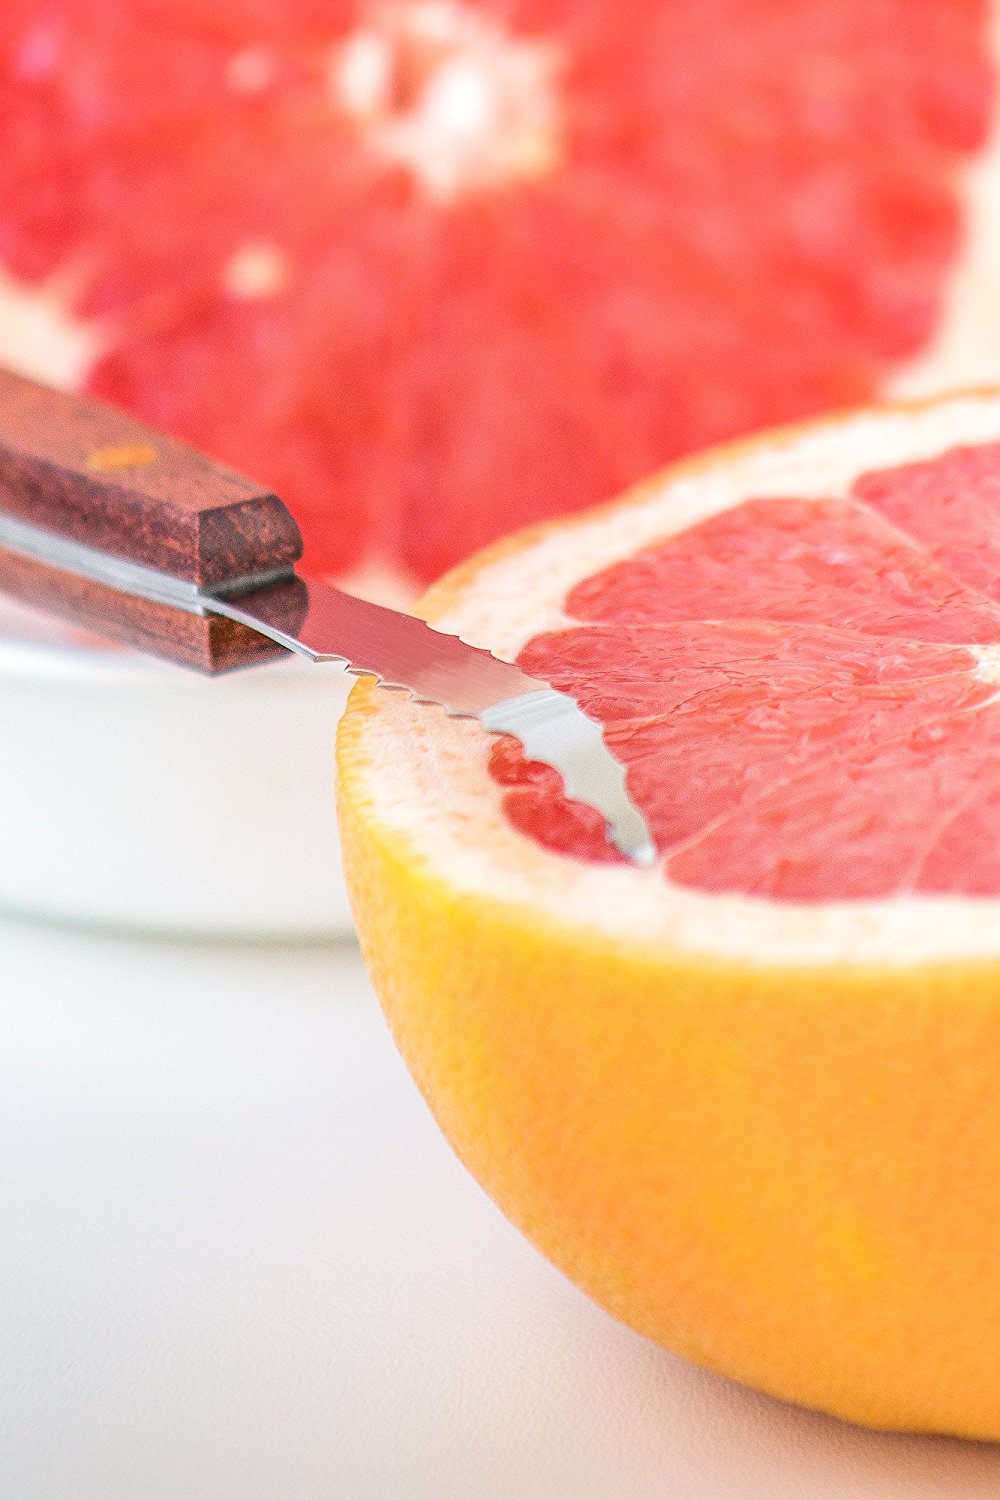 Grapefruit Knife